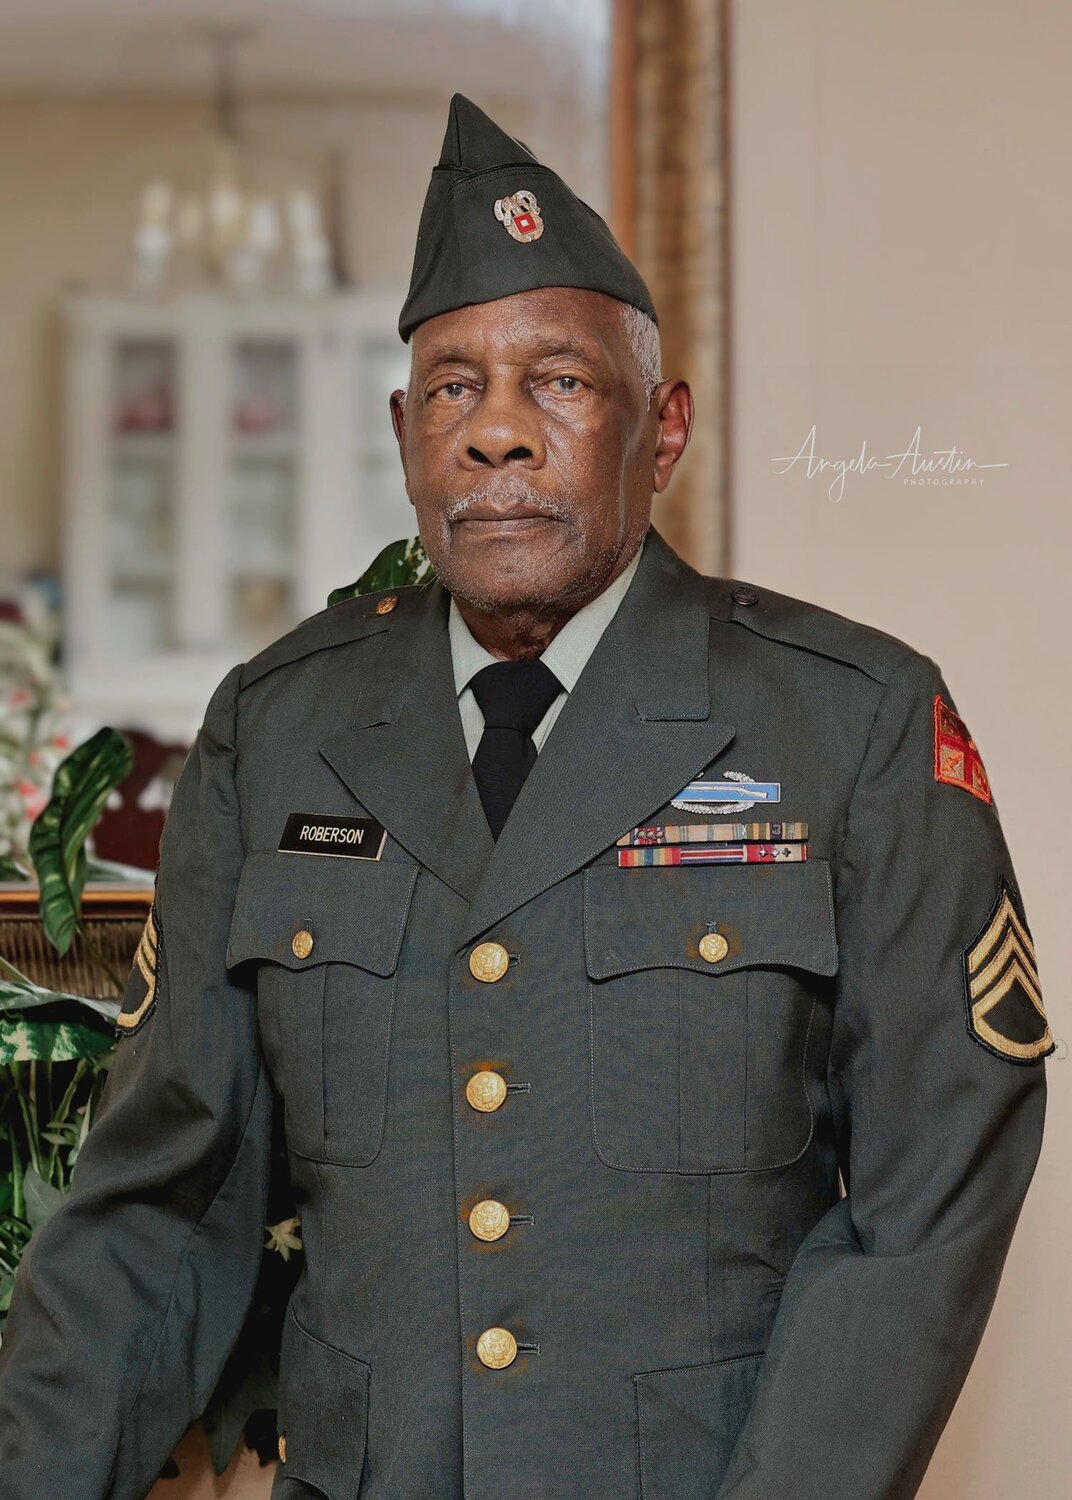 Mr. Leon Roberson, Sr., Staff Sergeant